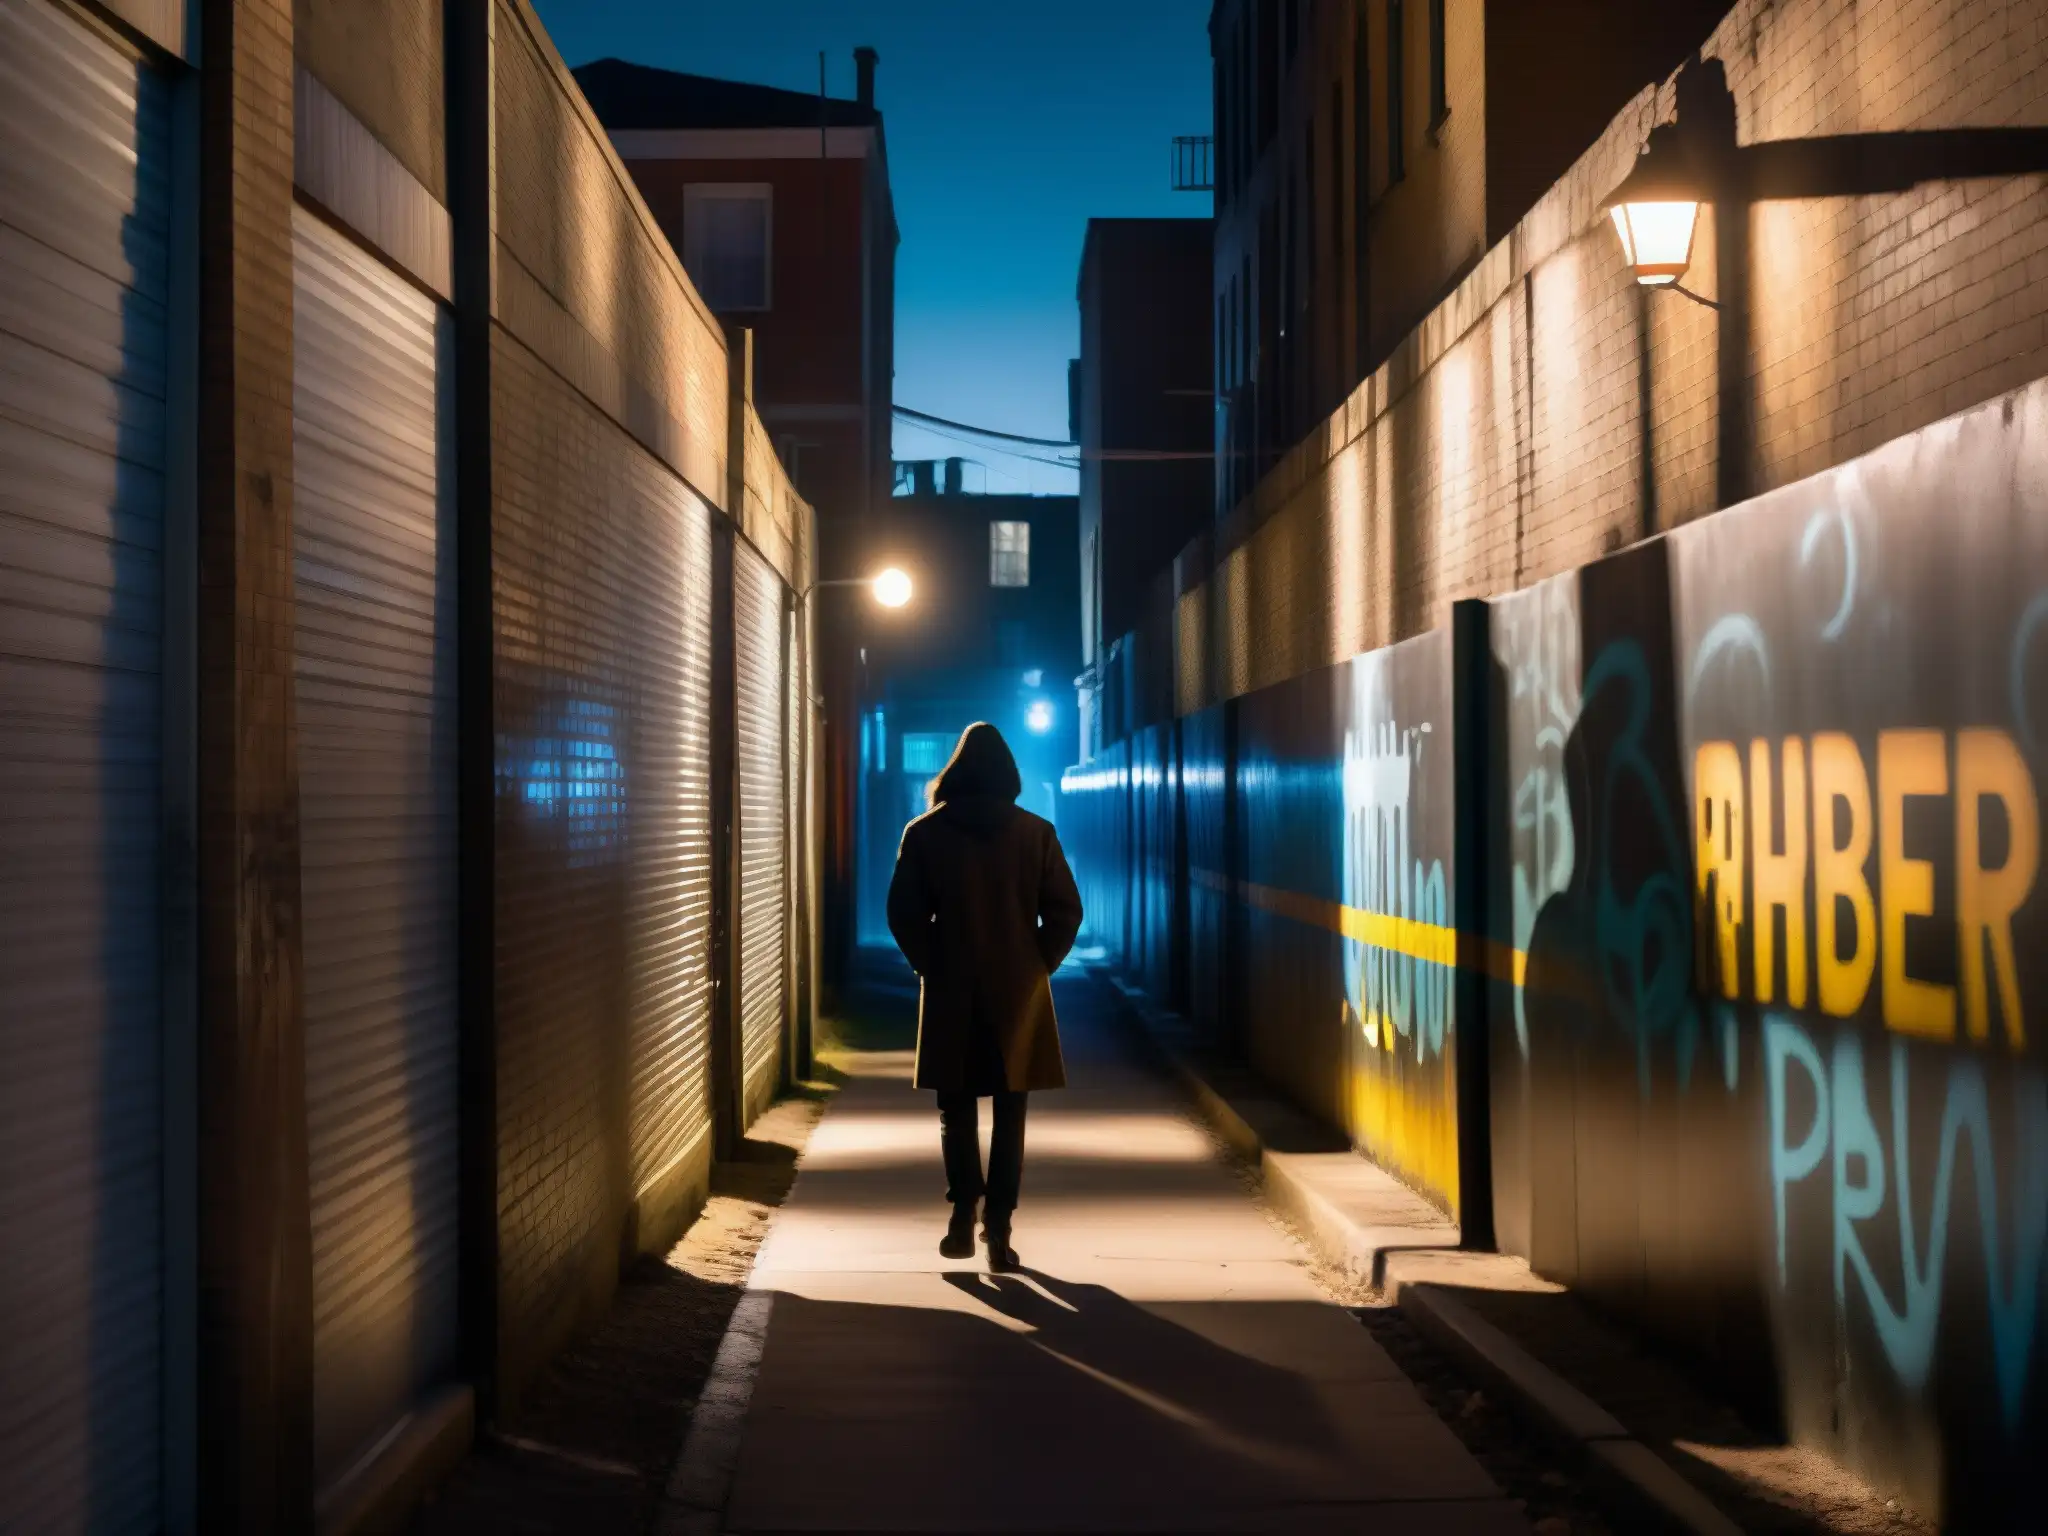 Un oscuro callejón urbano, con grafitis y luces tenues que proyectan sombras largas